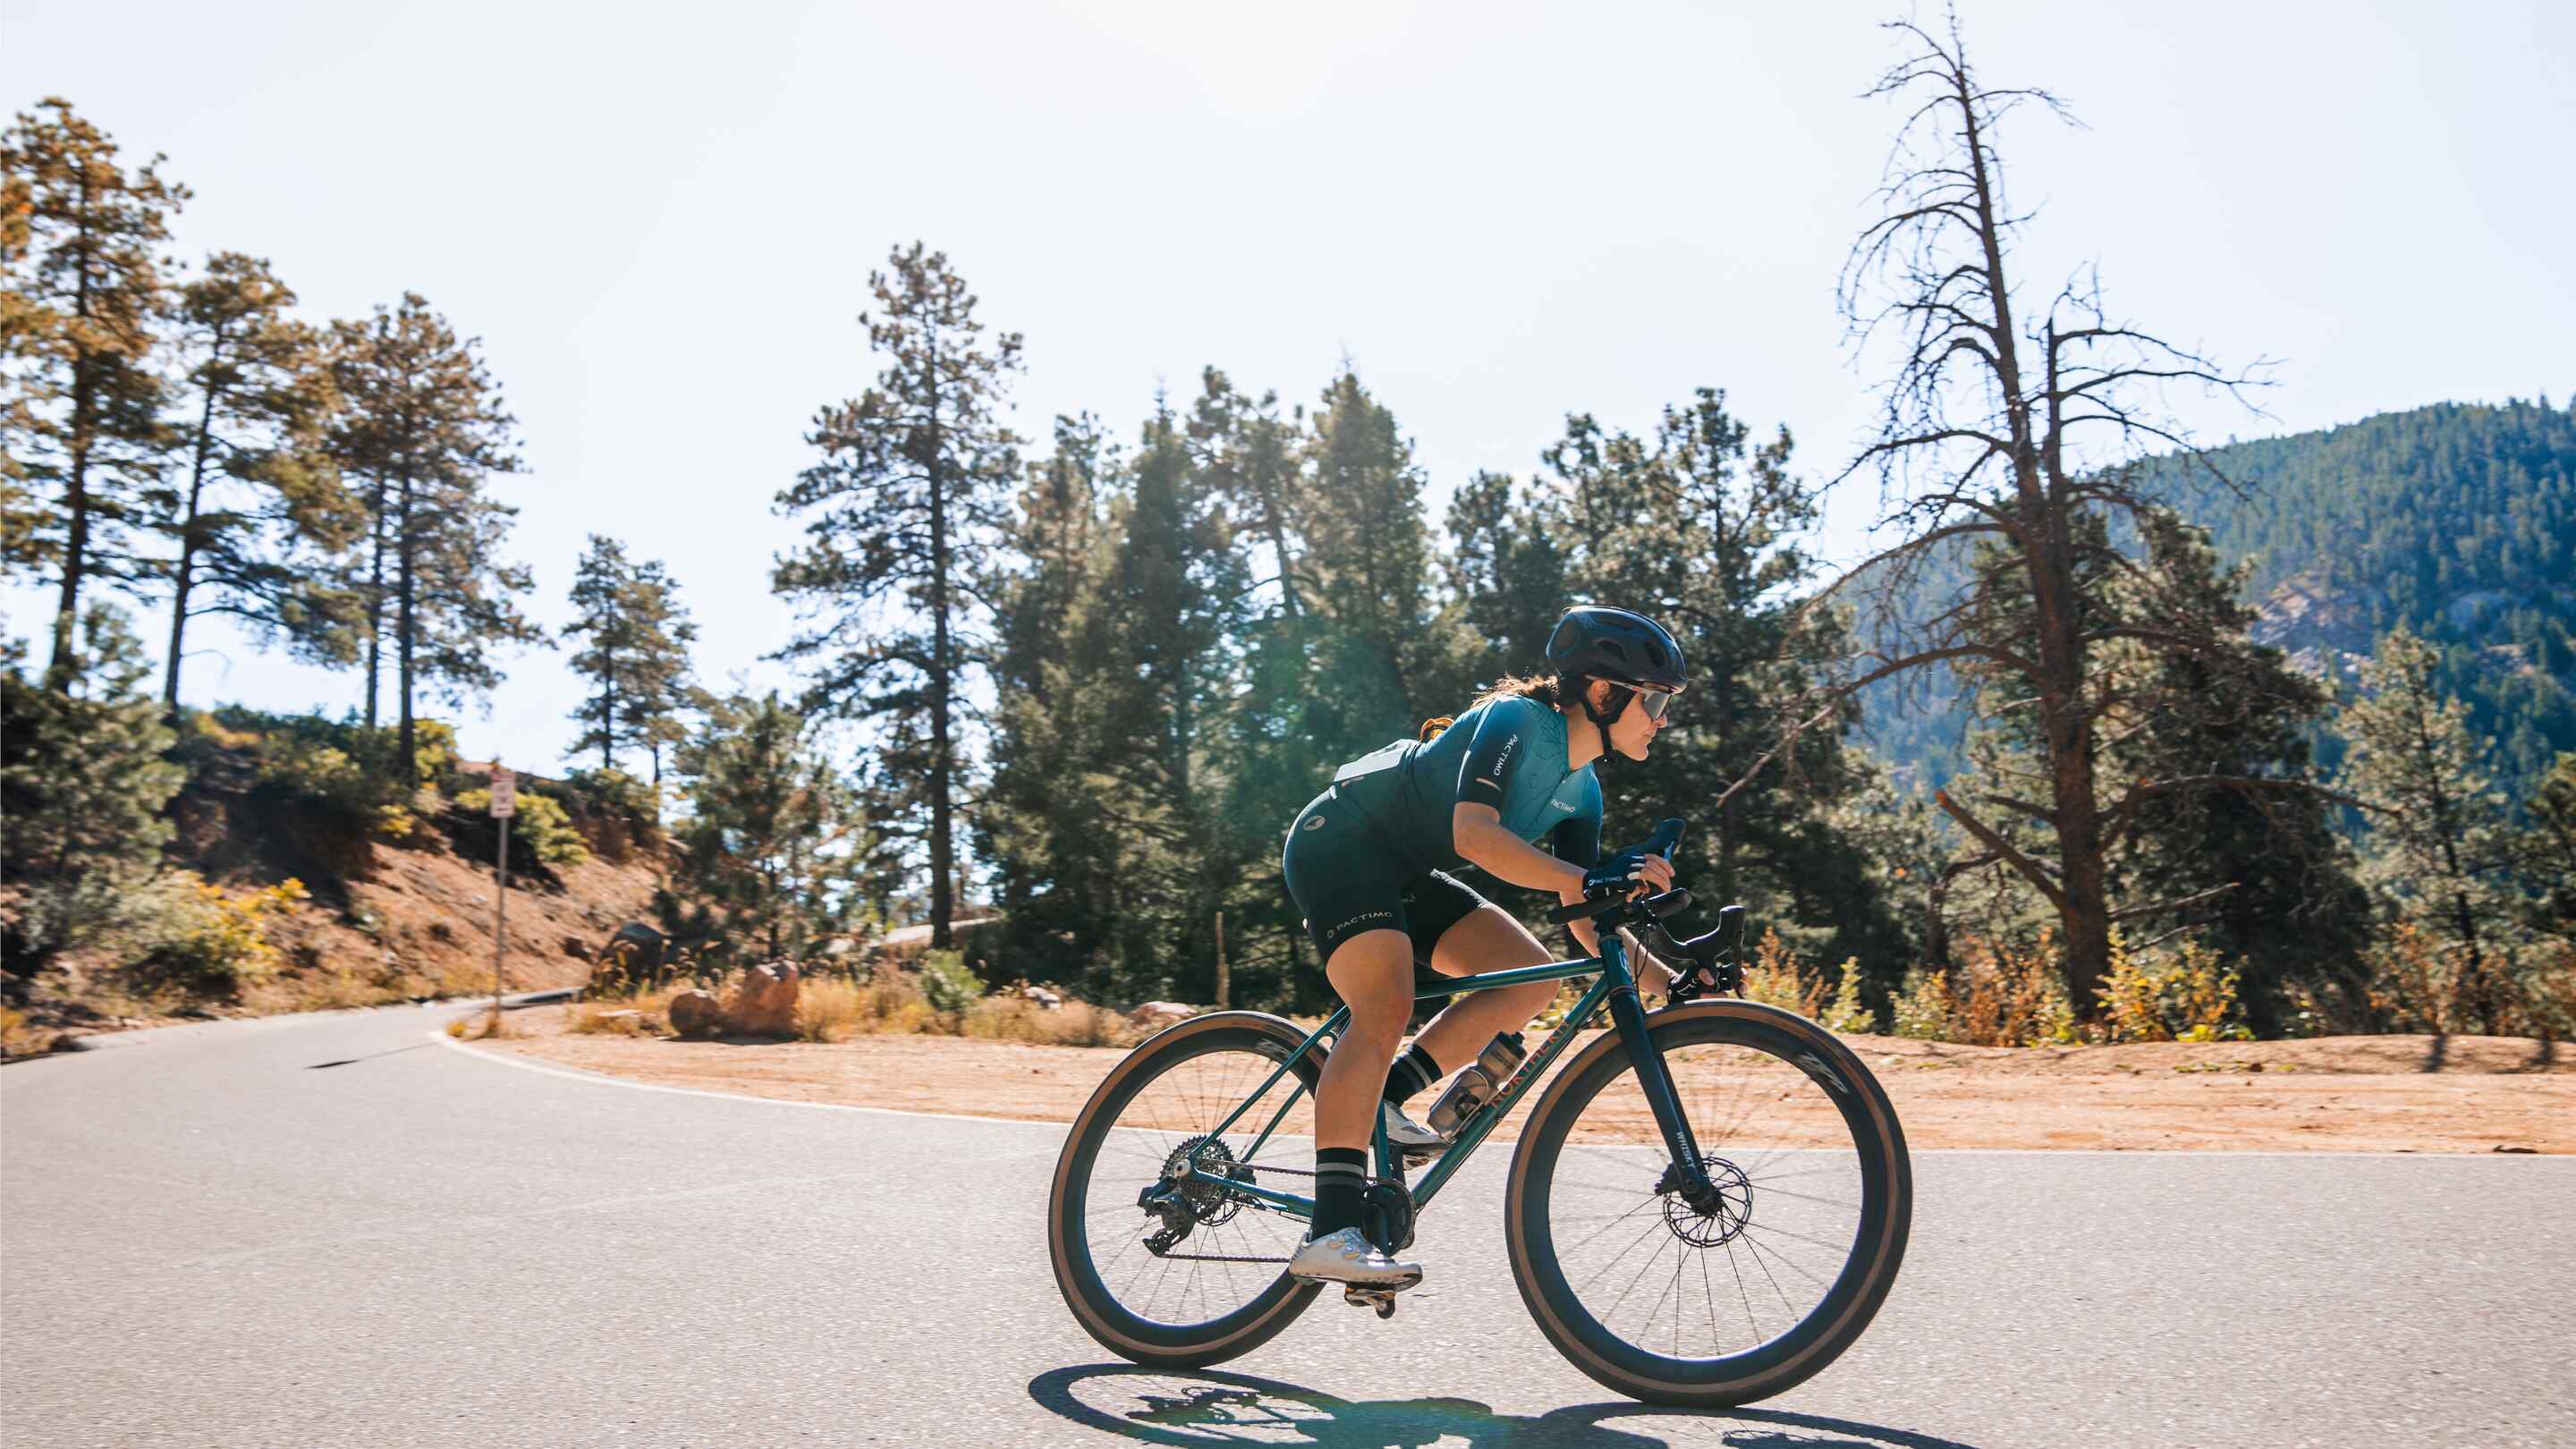 2019 New Team Bicycle Cycling Jersey Mountain Bike Jerseys 9D Bib Shorts Set Y71 